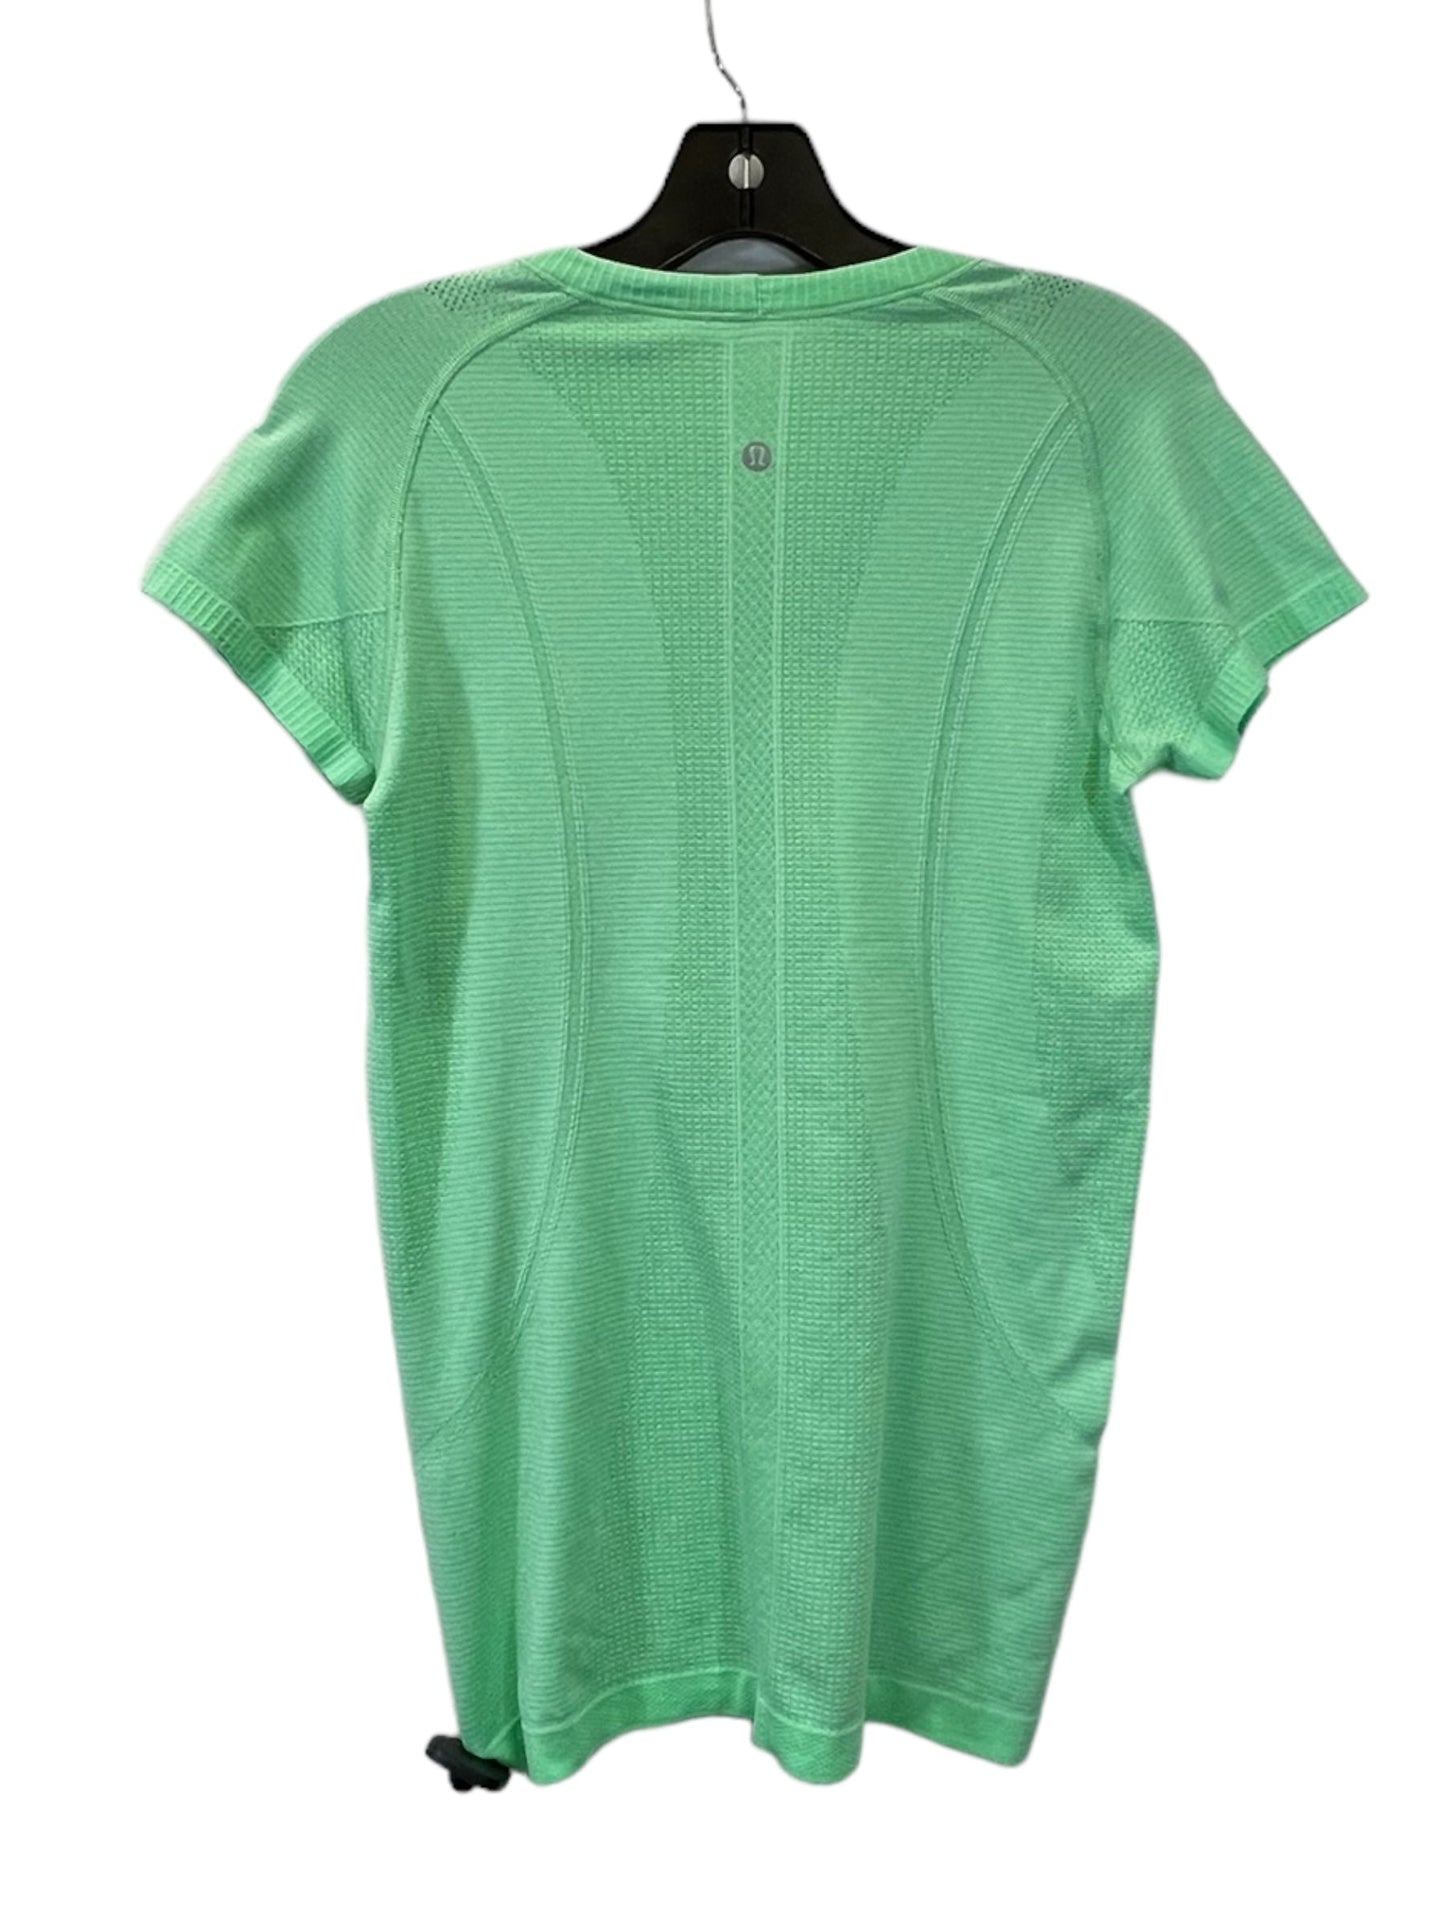 Green Athletic Top Short Sleeve Lululemon, Size S